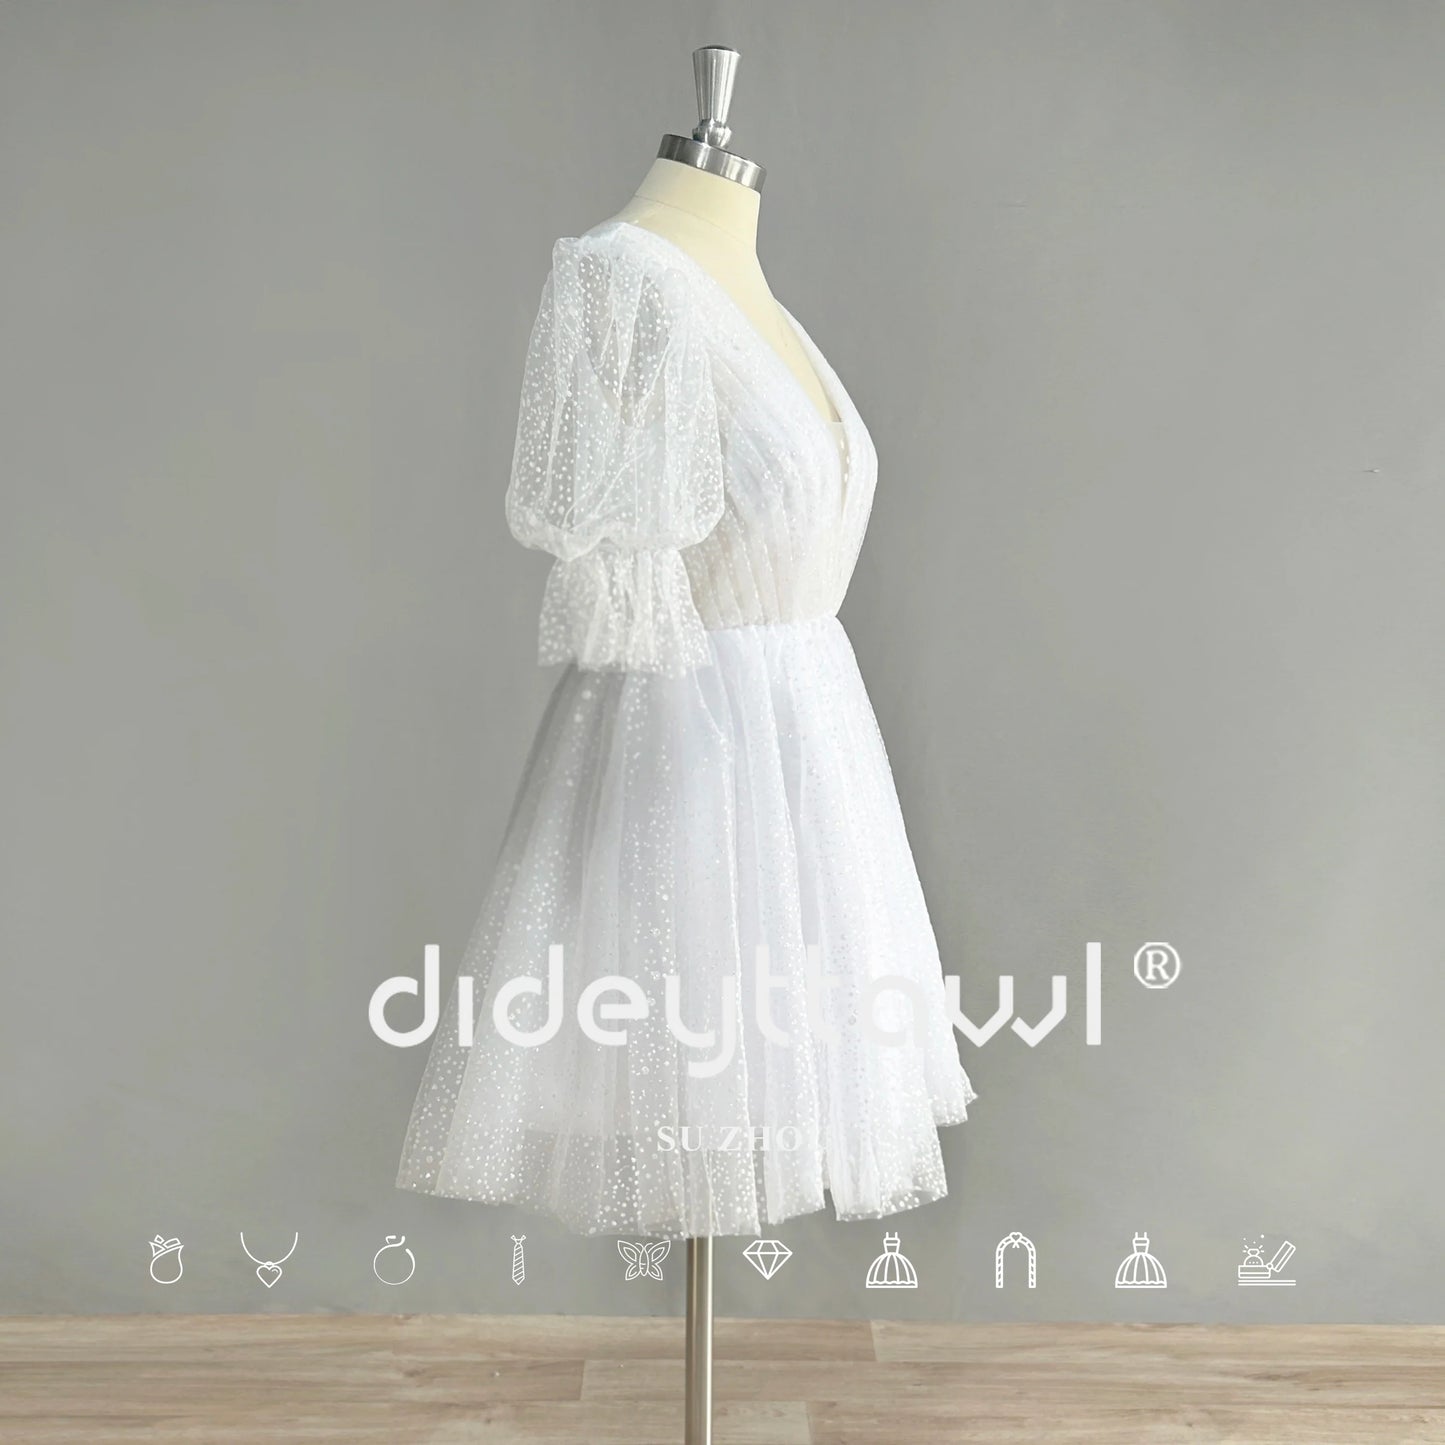 Mini robe de mariée courte en Tulle scintillant, manches bouffantes, col en V, dos nu, au-dessus du genou, robe de mariée brillante